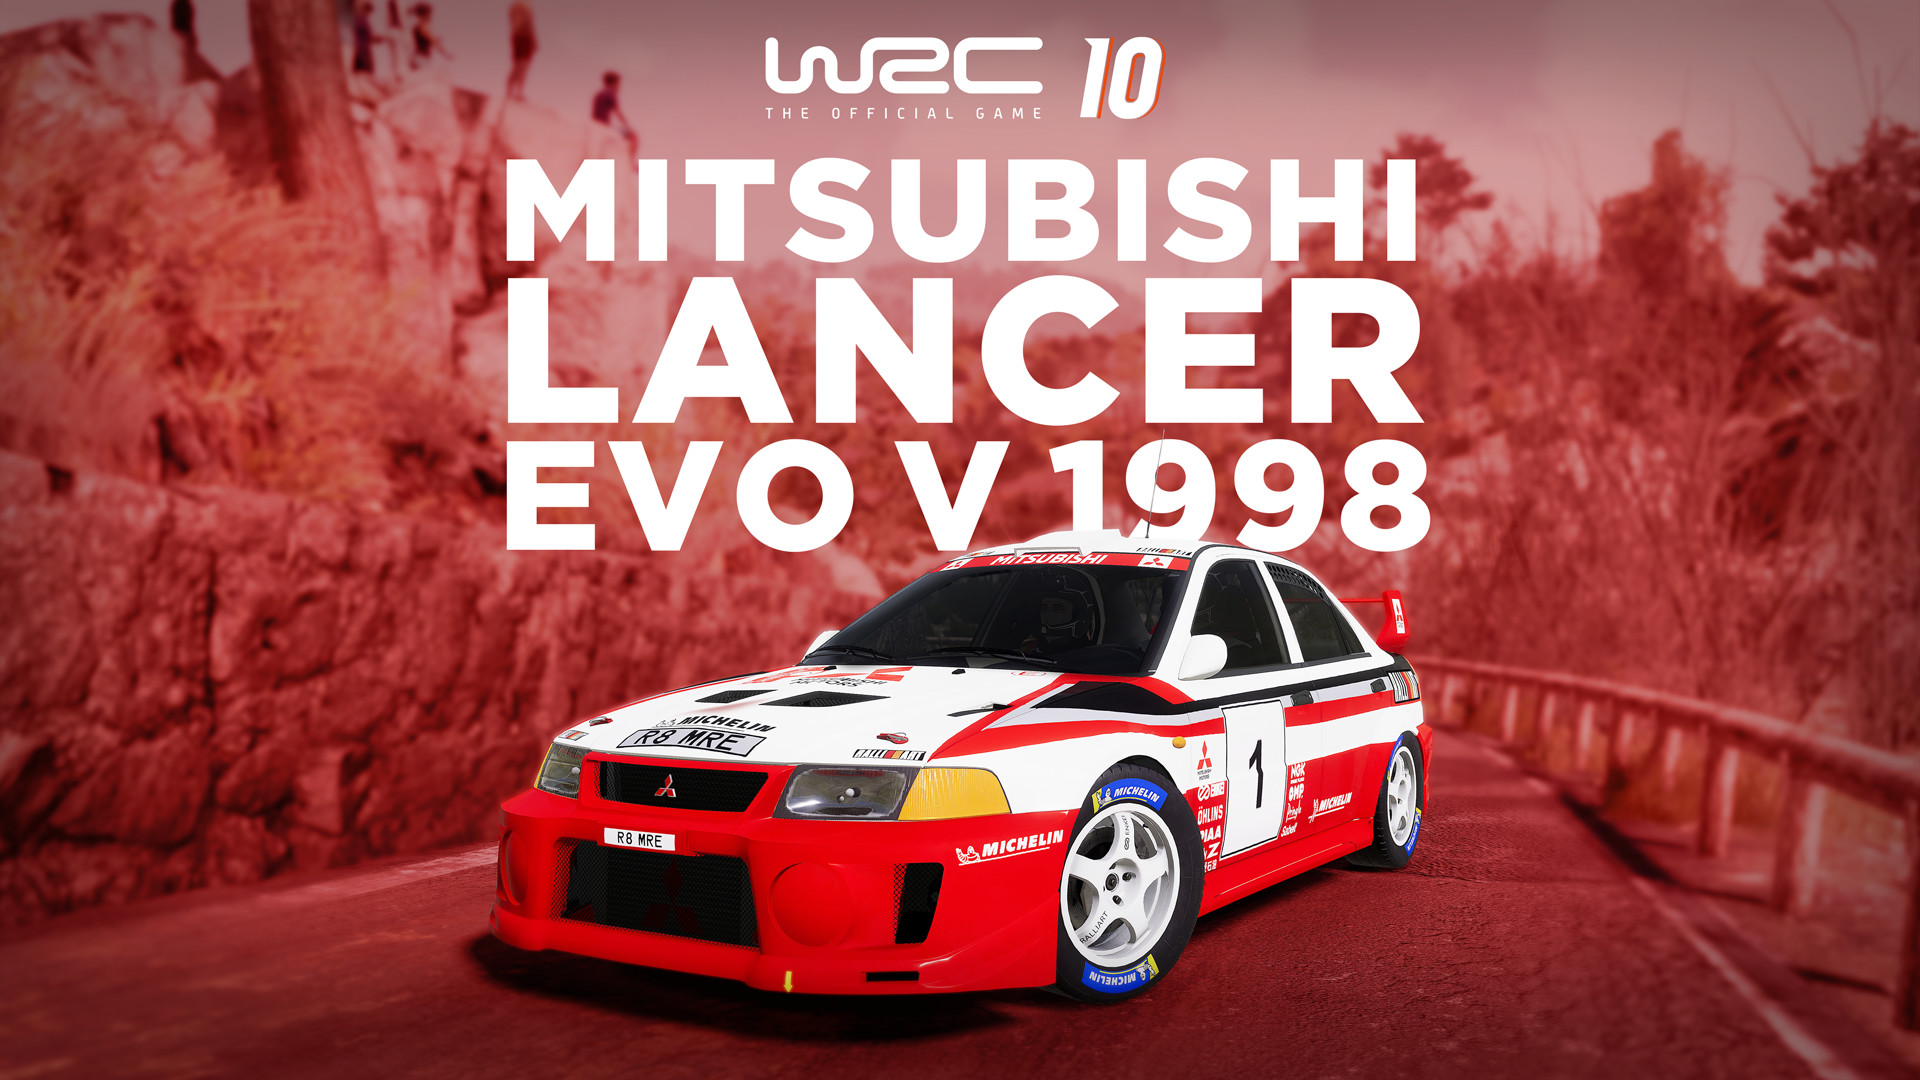 WRC 10 - Mitsubishi Lancer Evo V 1998 DLC Steam CD Key [USD 2.69]